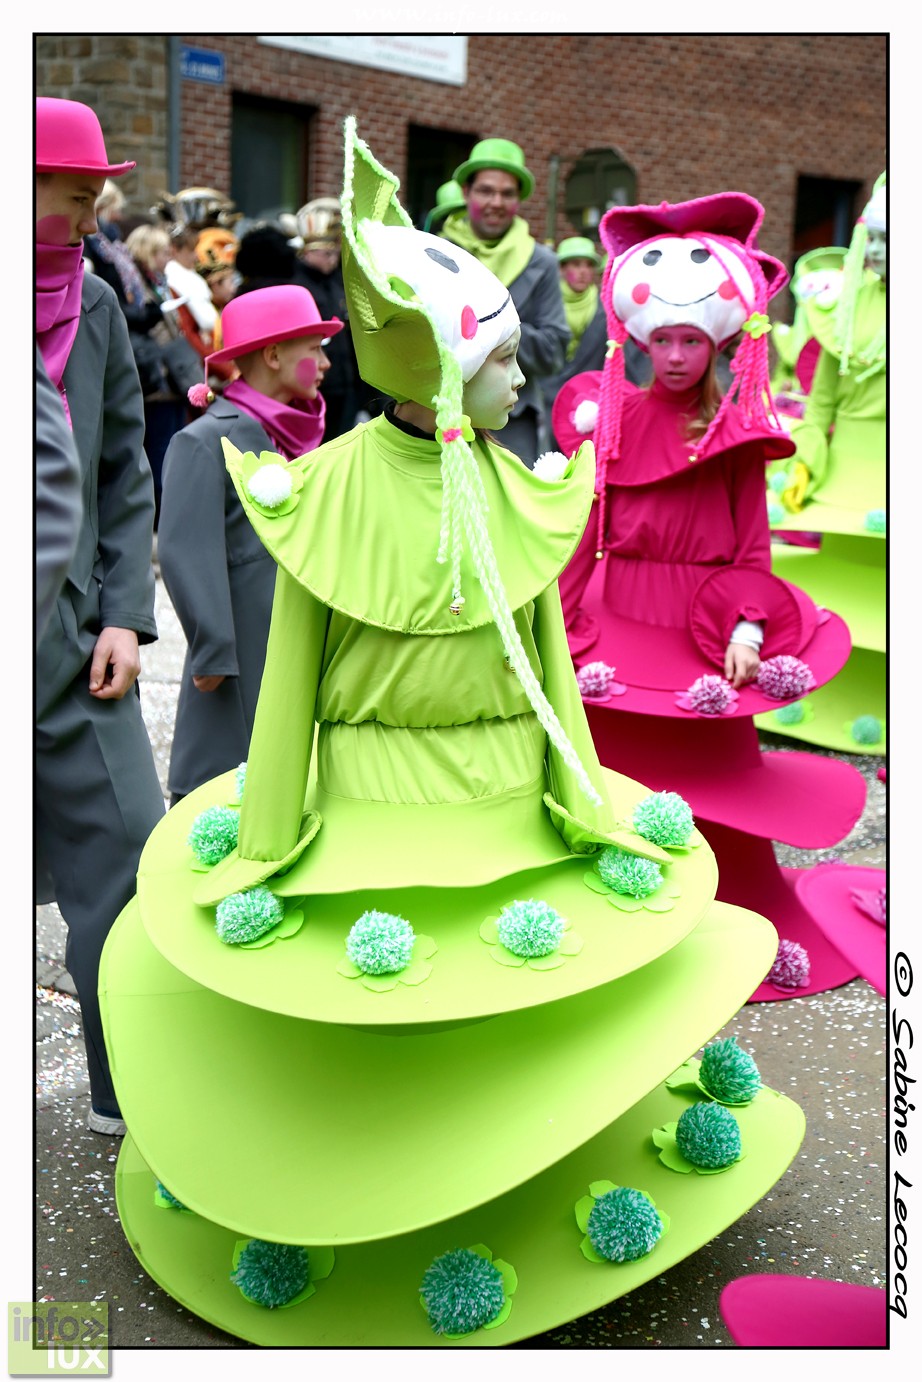 images/stories/PHOTOSREP/La-Roche-en-Ardenne/Carnaval2/Carnaval-larocheb108